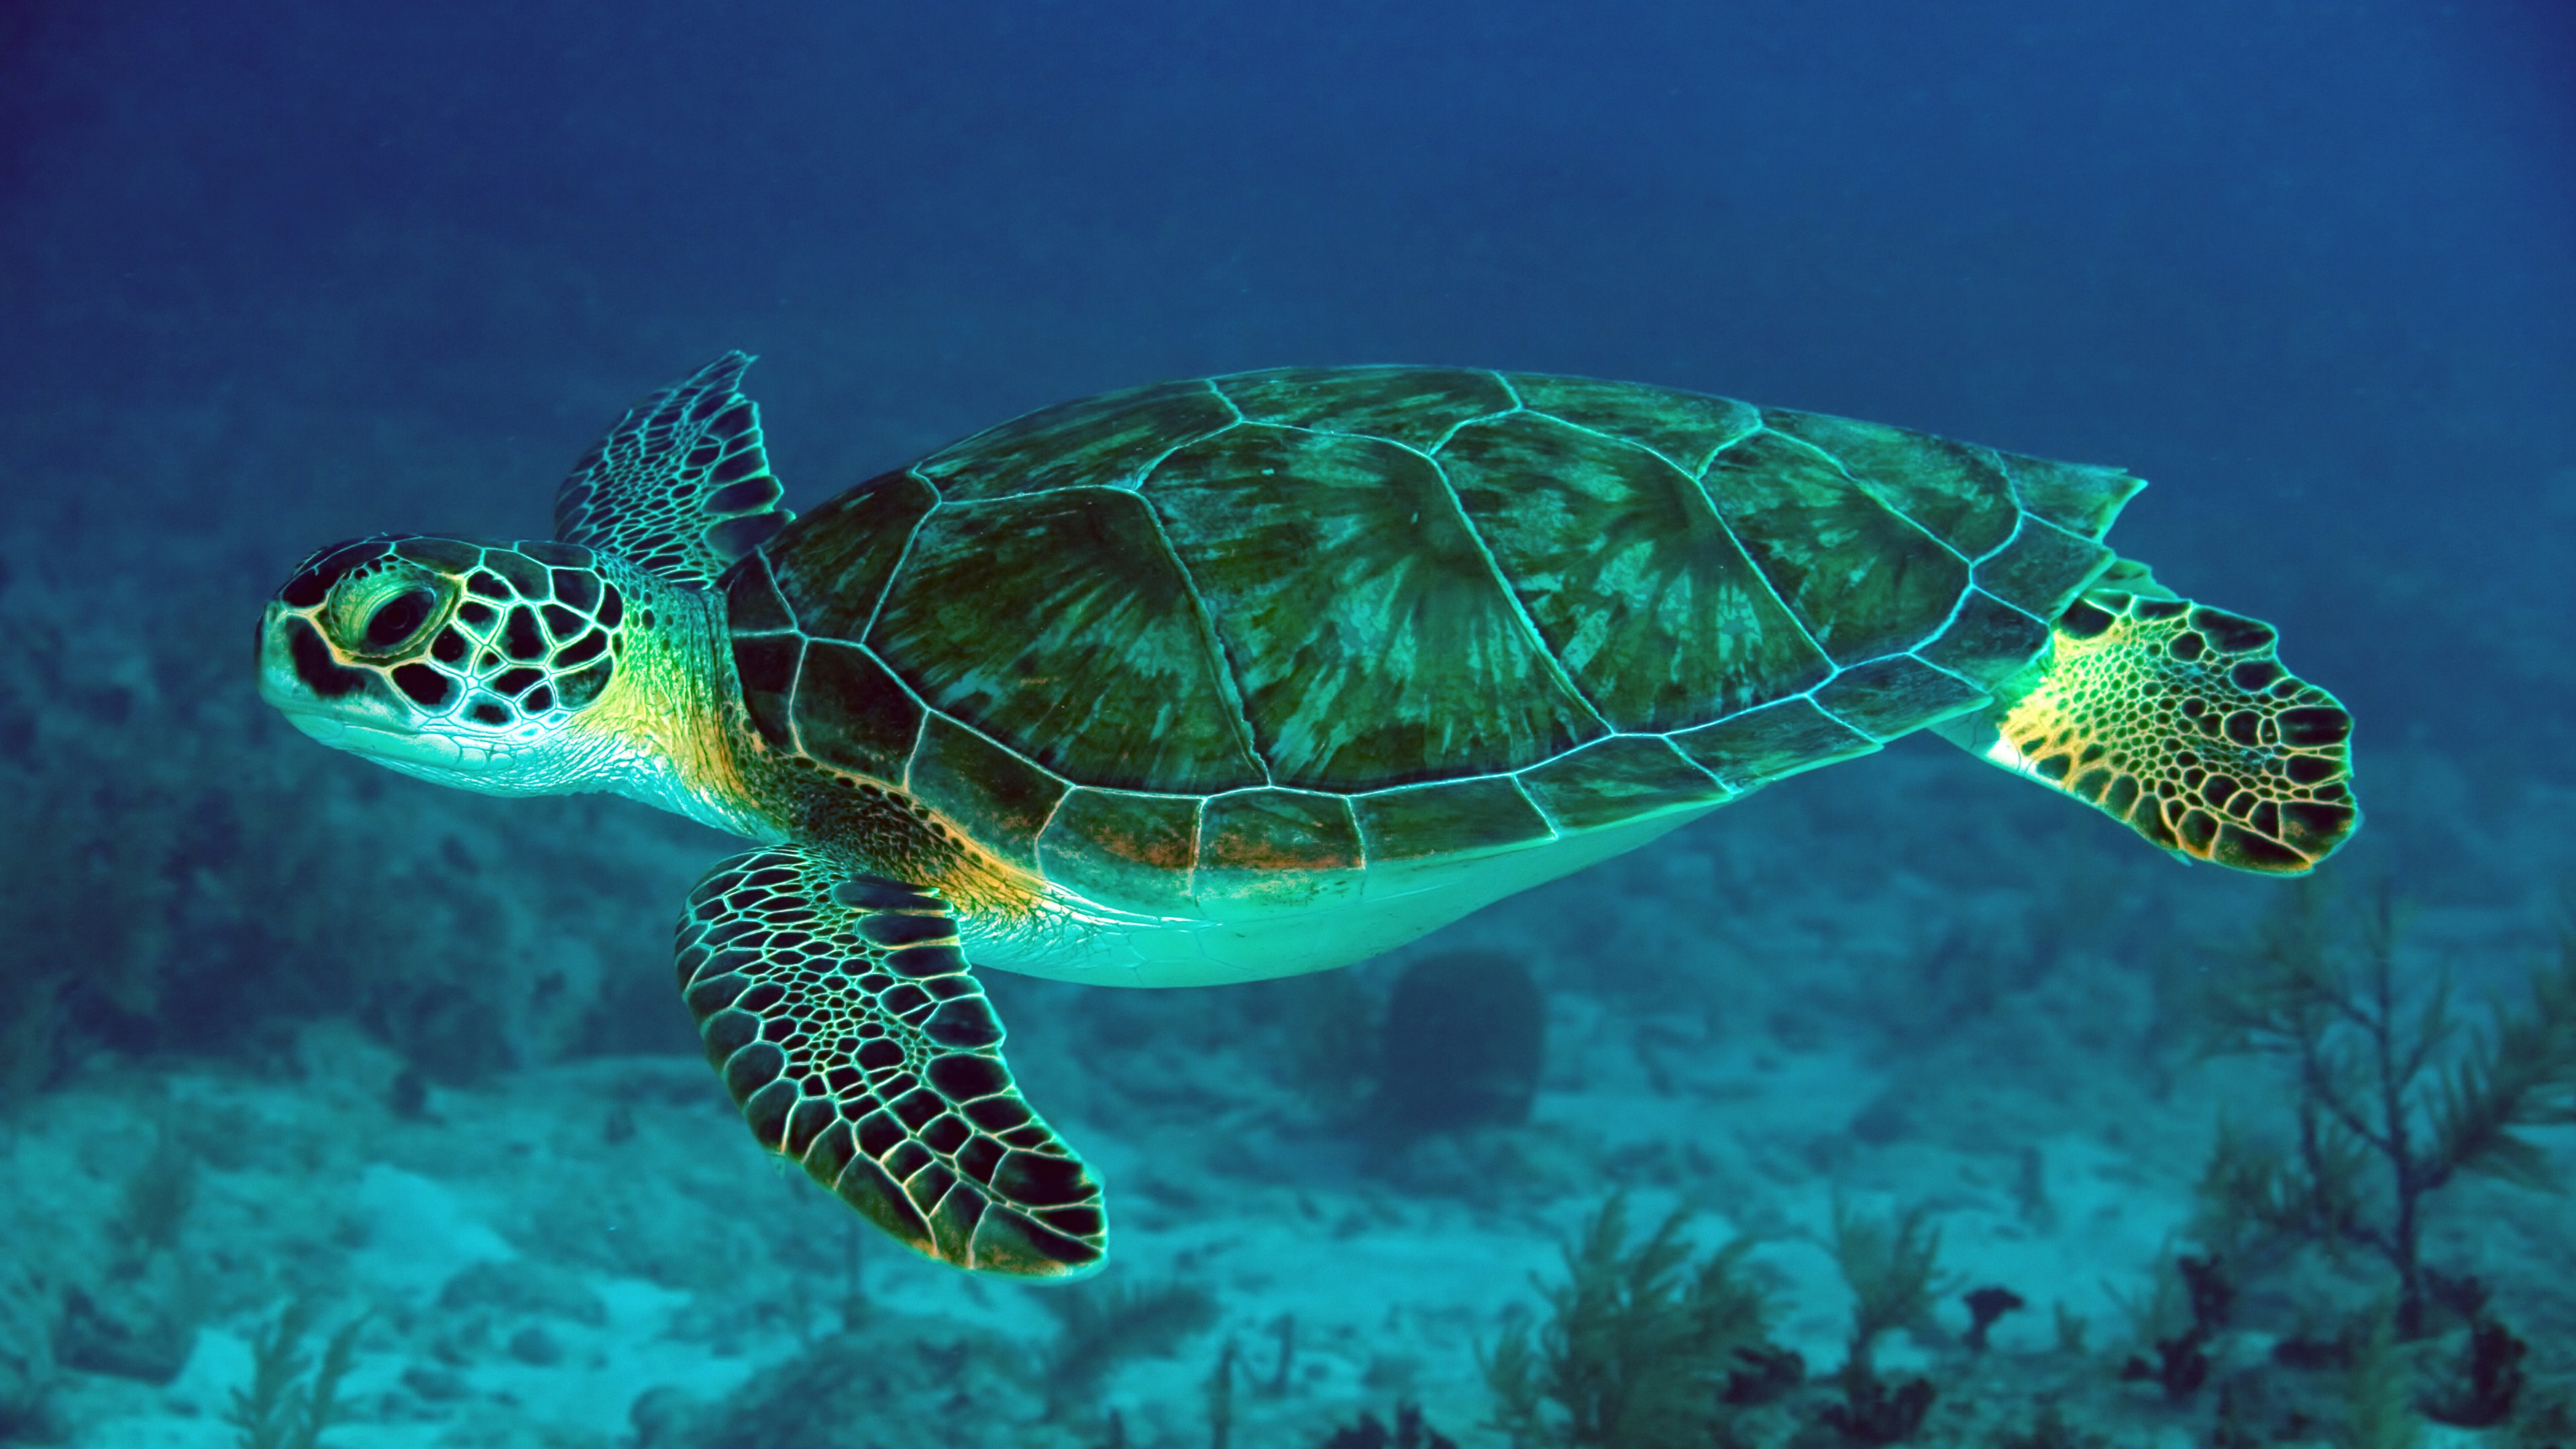 Sea Turtle 4k Ultra HD Wallpaper Background Image